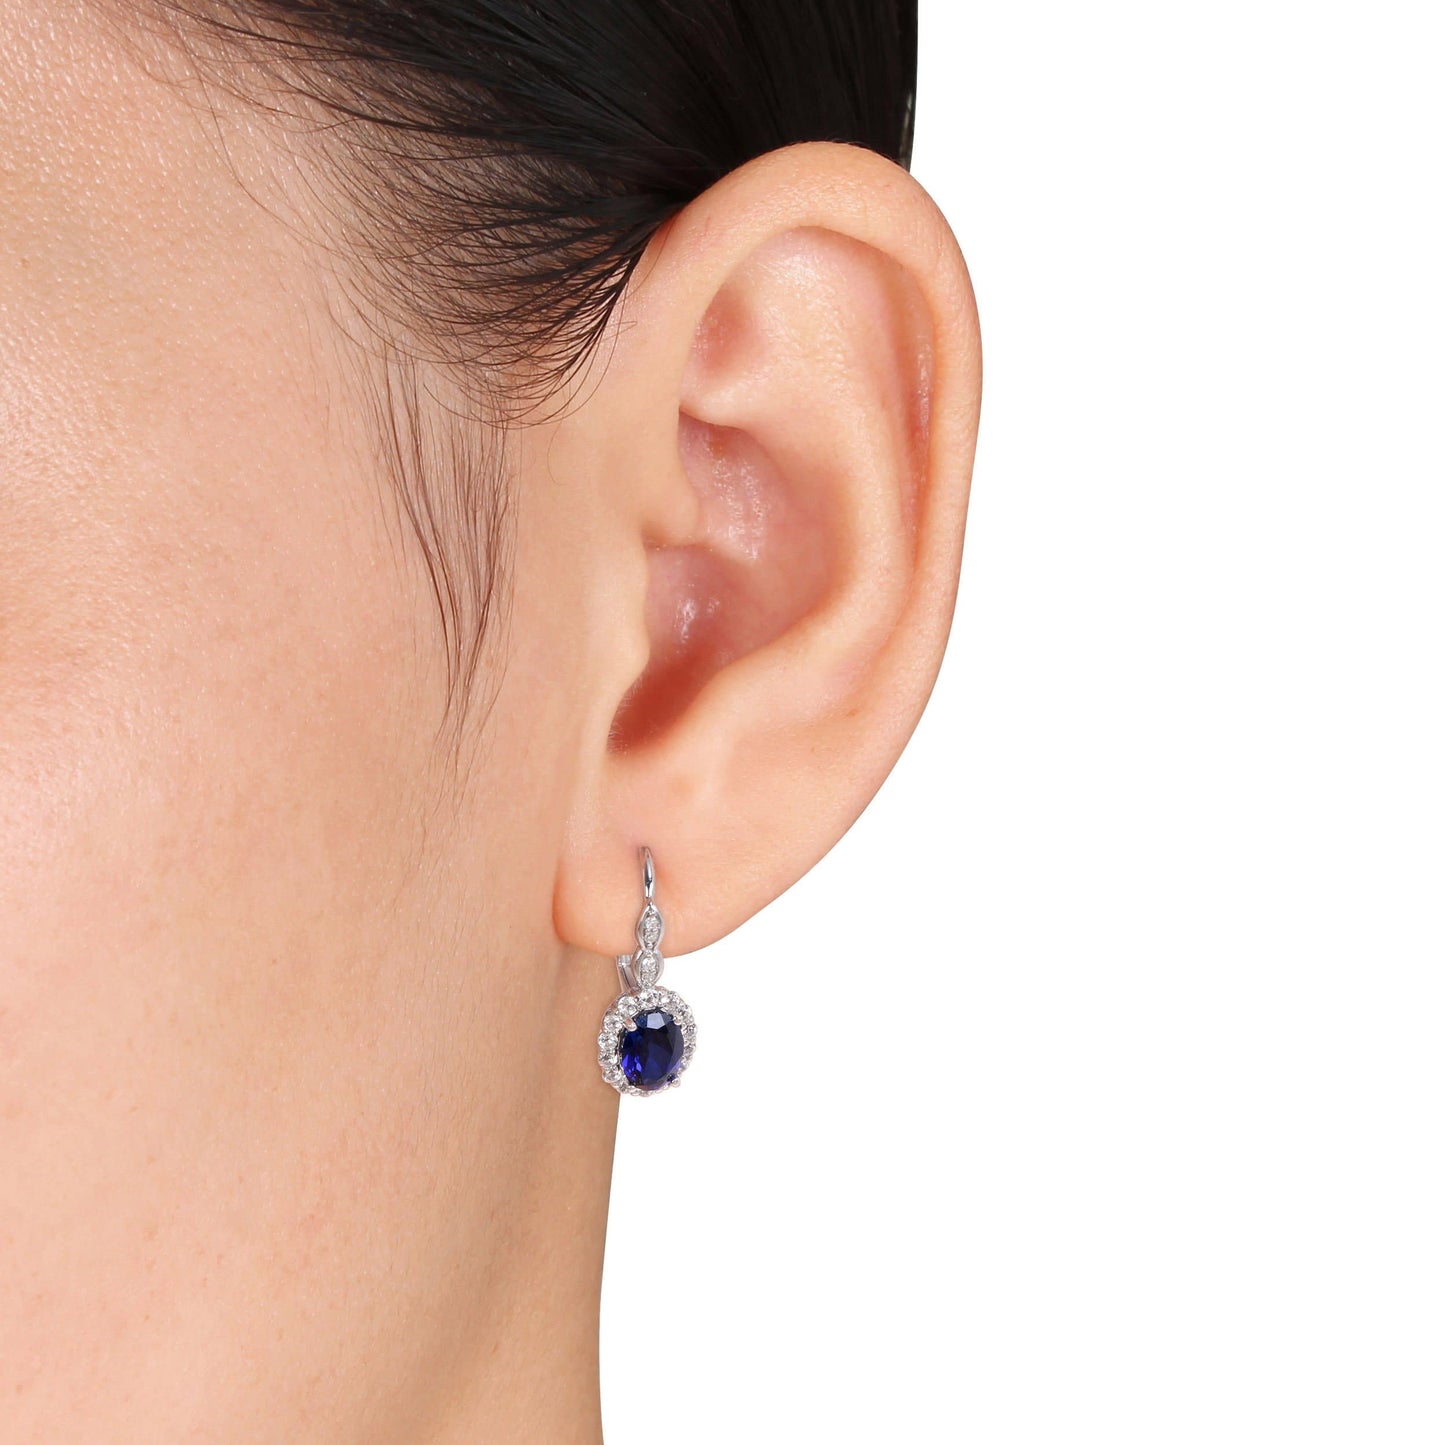 Sophia B 0.04ct Diamond & 3 3/8ct Created Blue Sapphire & White Topaz Earrings